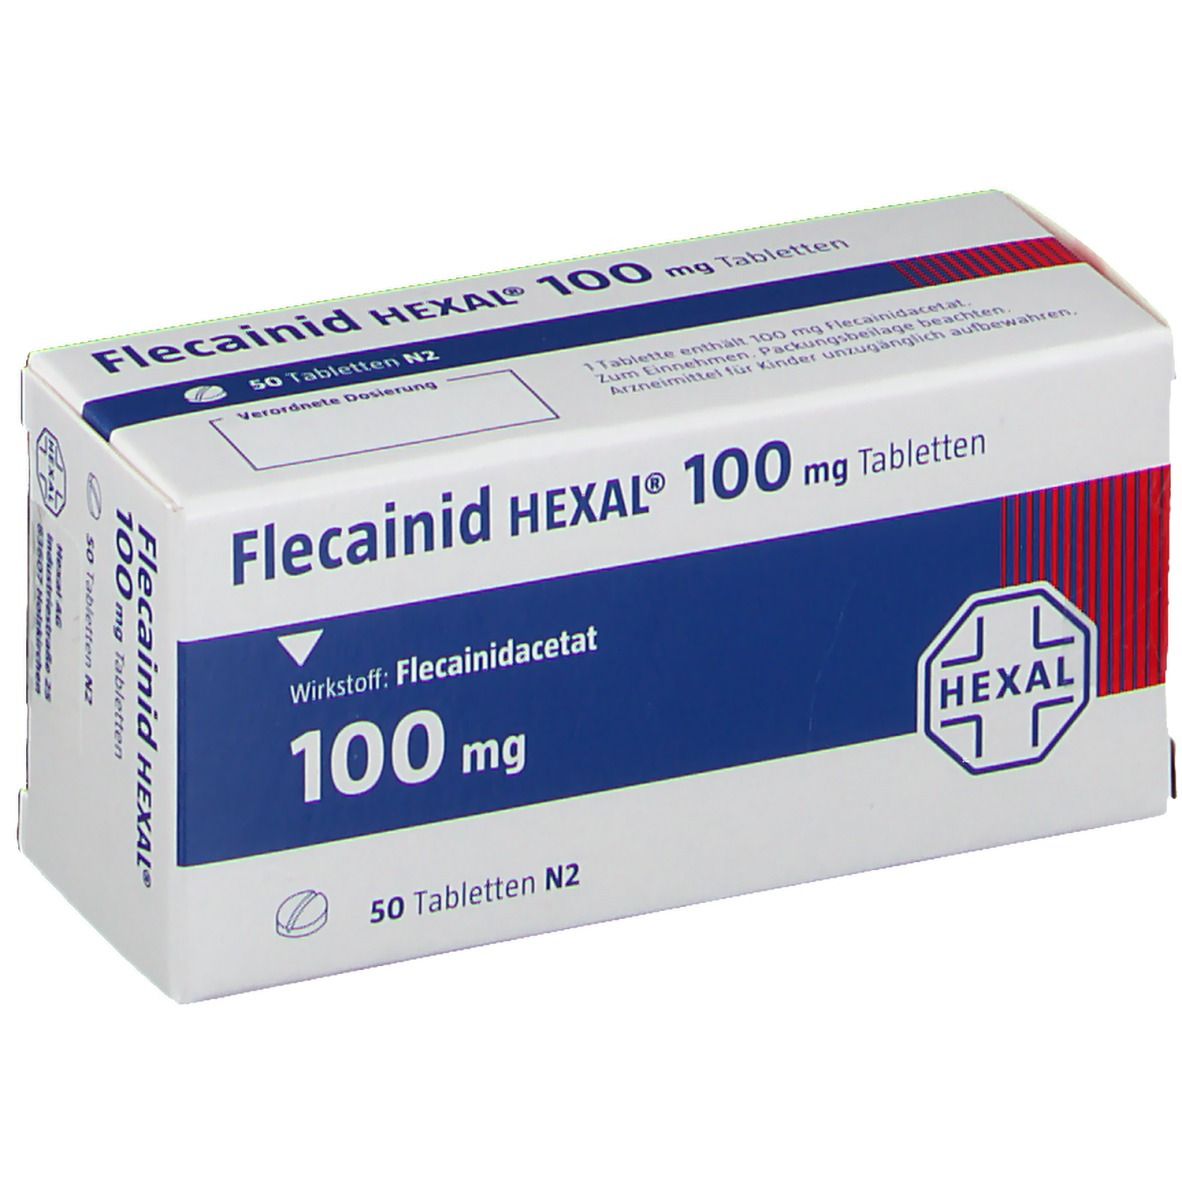 Flecainid HEXAL® 100 mg